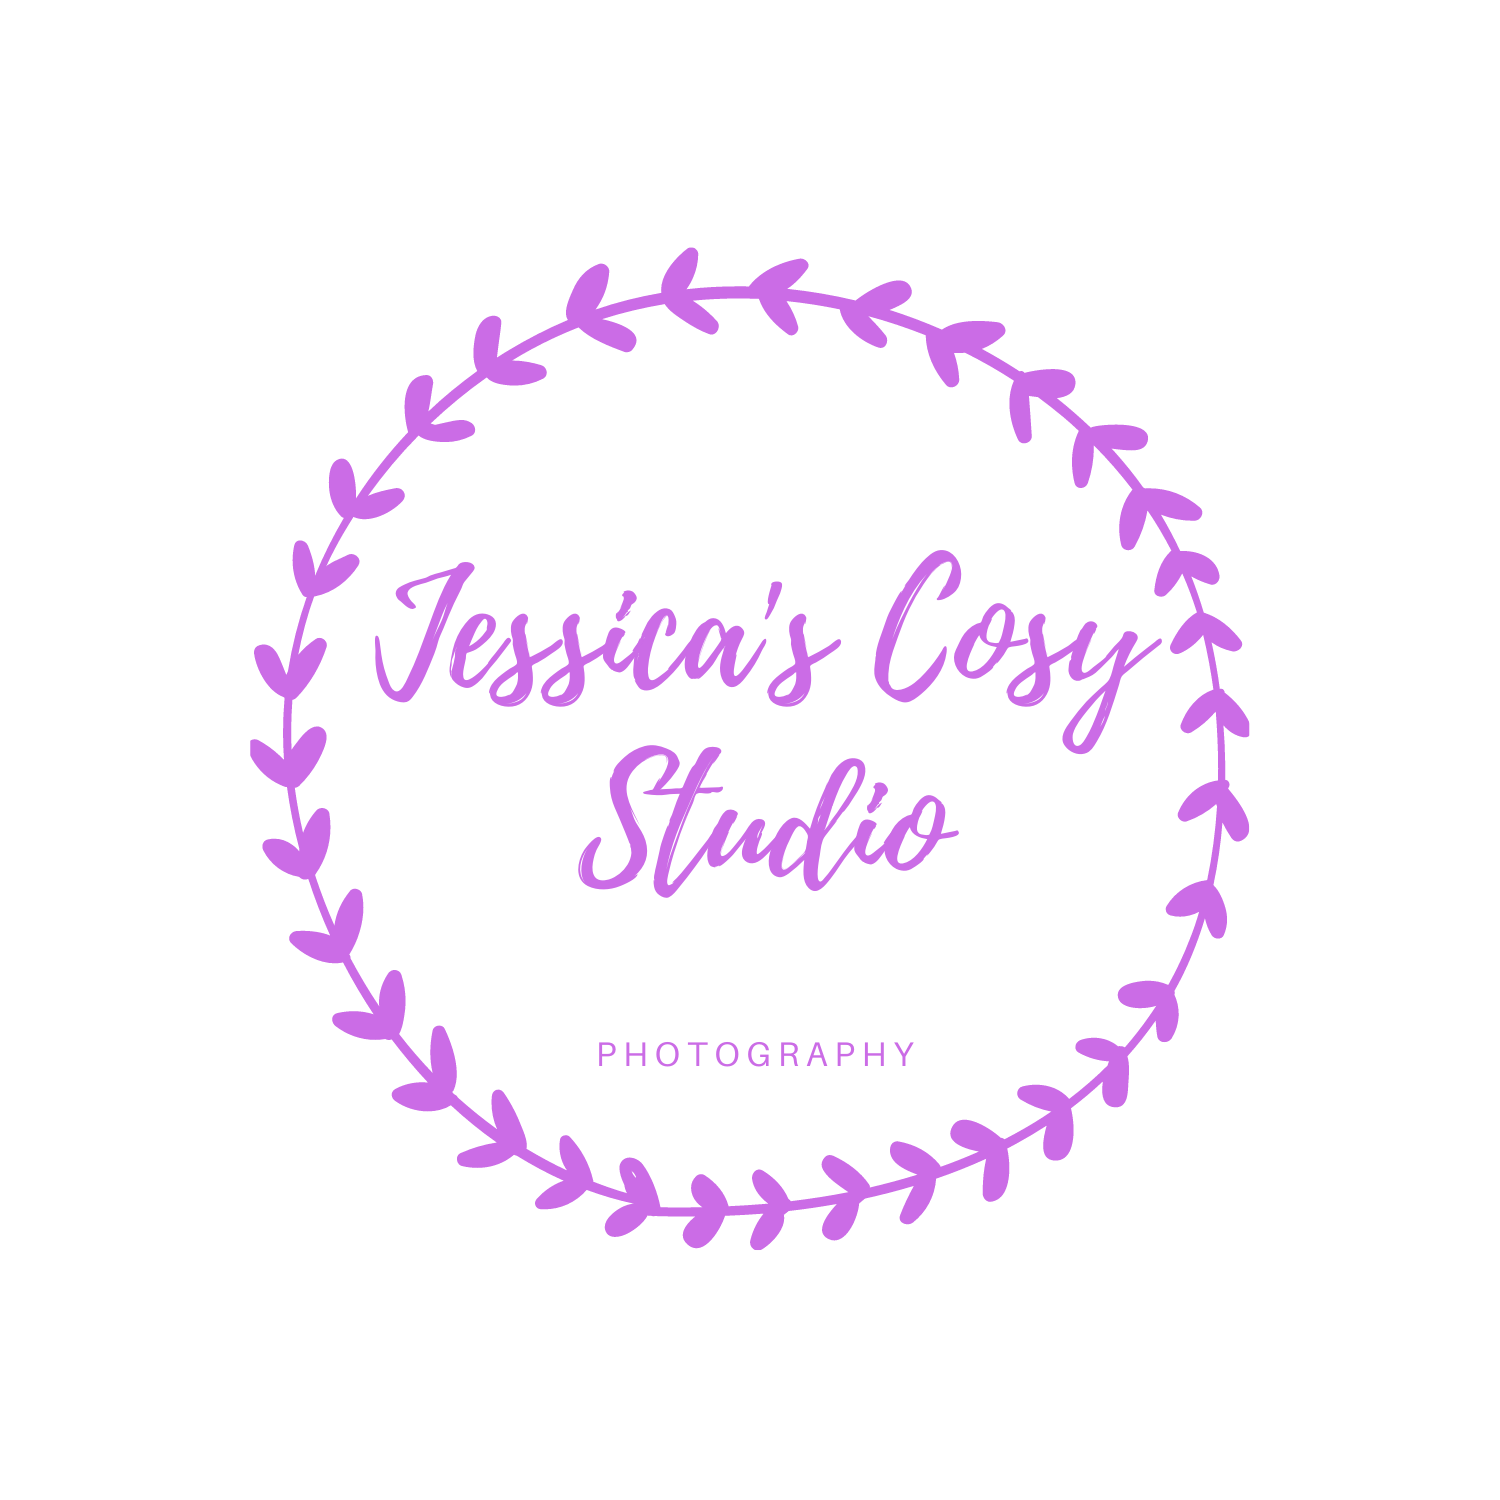 Jessica'sCosyStudioPhotography's logo